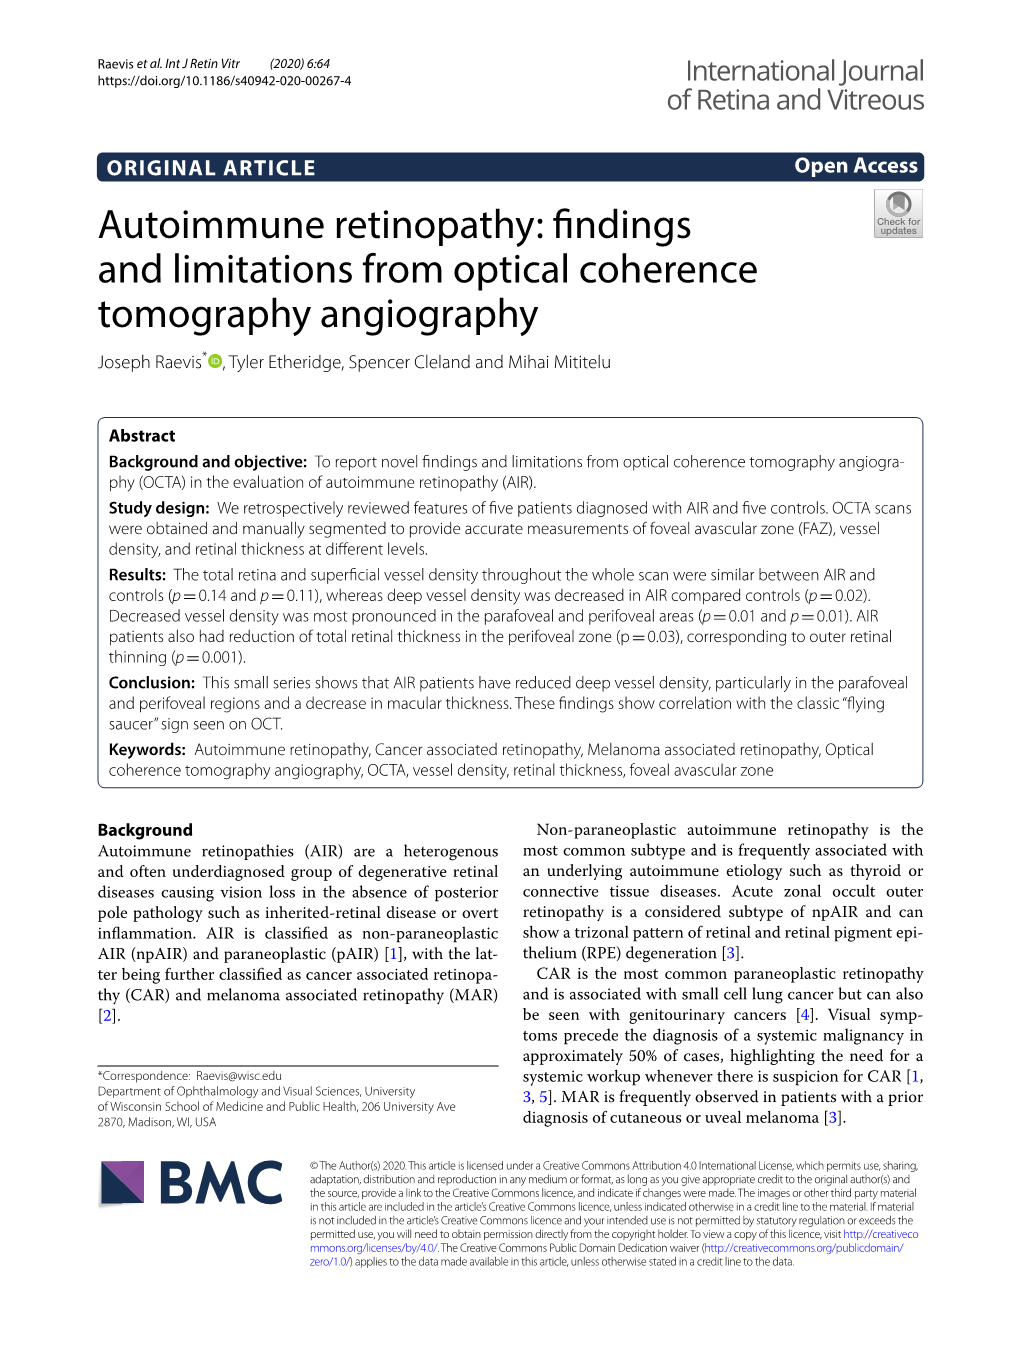 Autoimmune Retinopathy: Fndings and Limitations from Optical Coherence Tomography Angiography Joseph Raevis* , Tyler Etheridge, Spencer Cleland and Mihai Mititelu